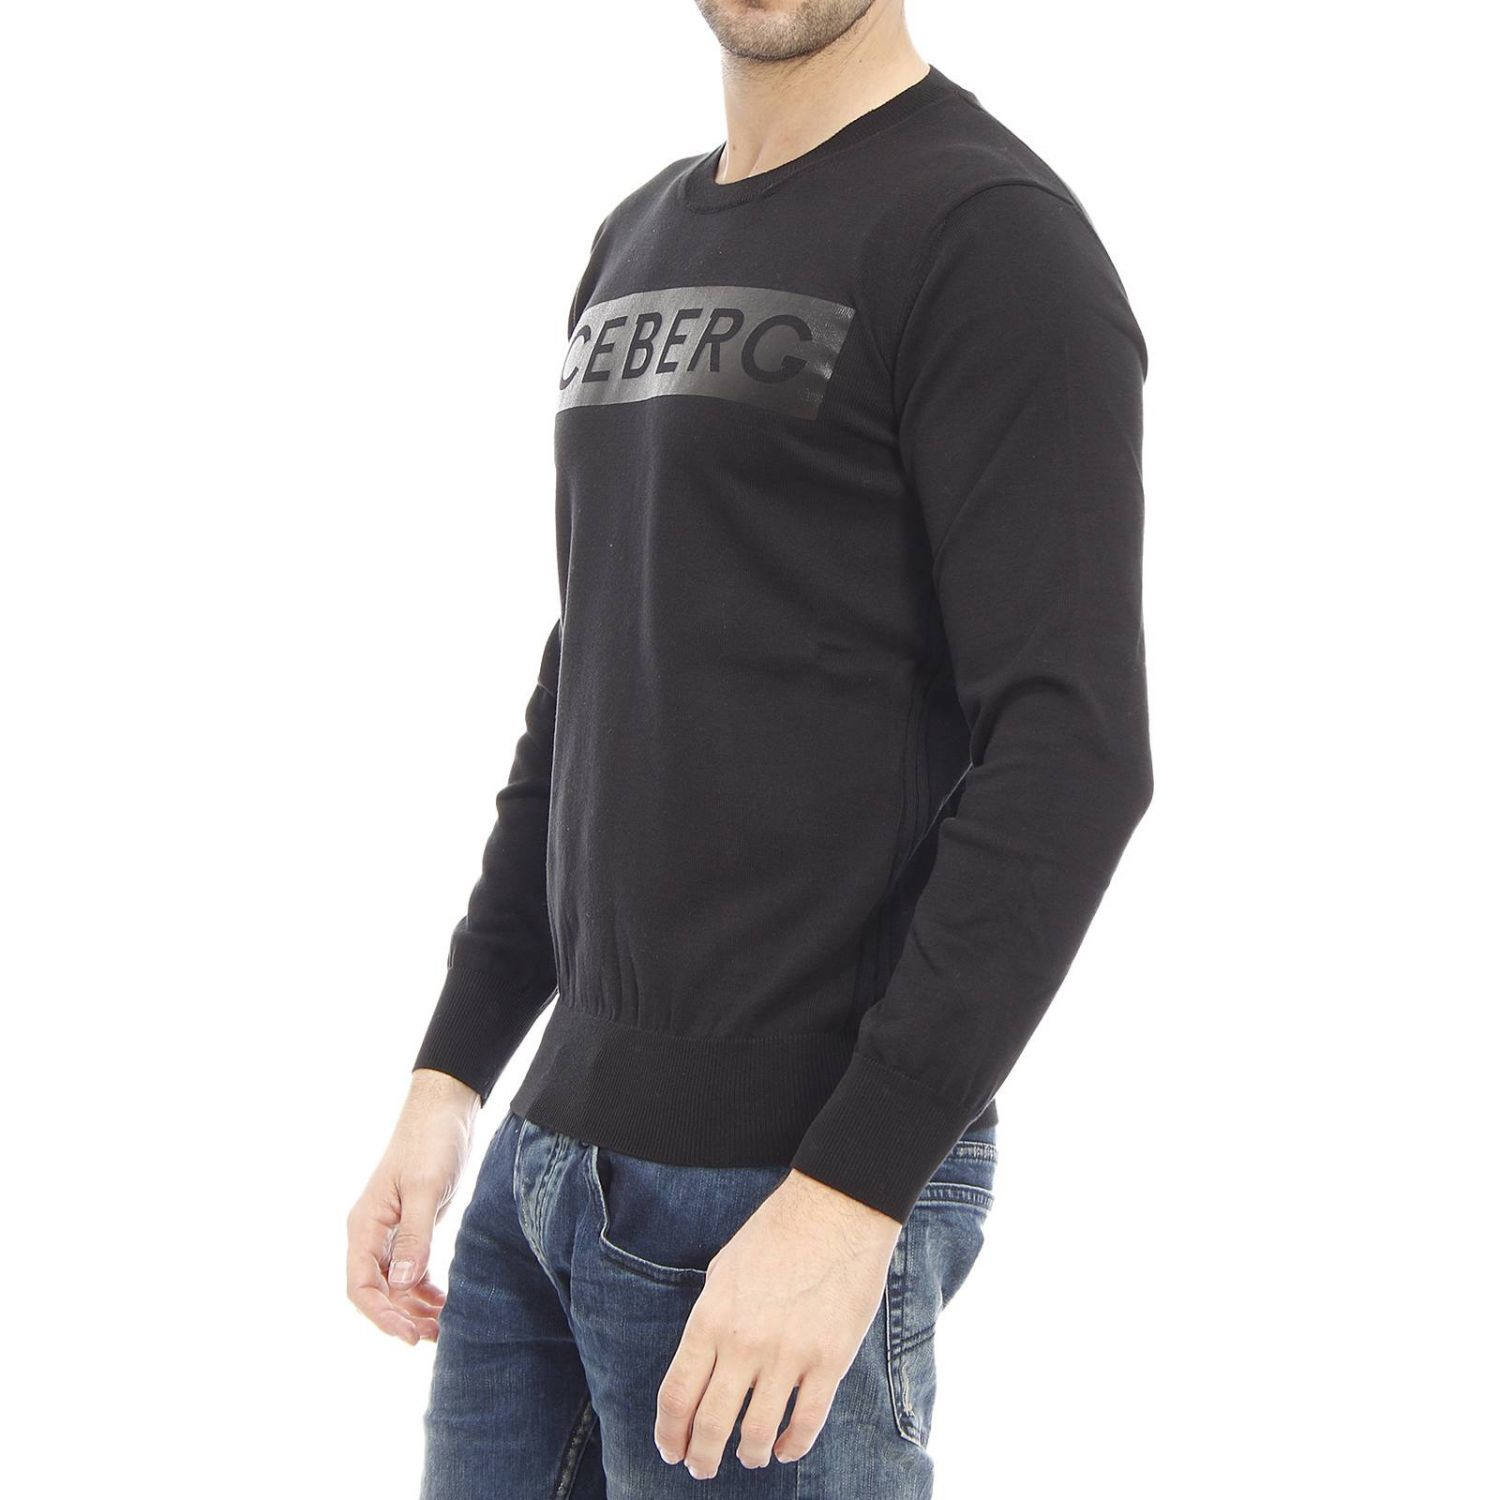 Iceberg Sweater Reviews - Online Shopping Iceberg Sweater